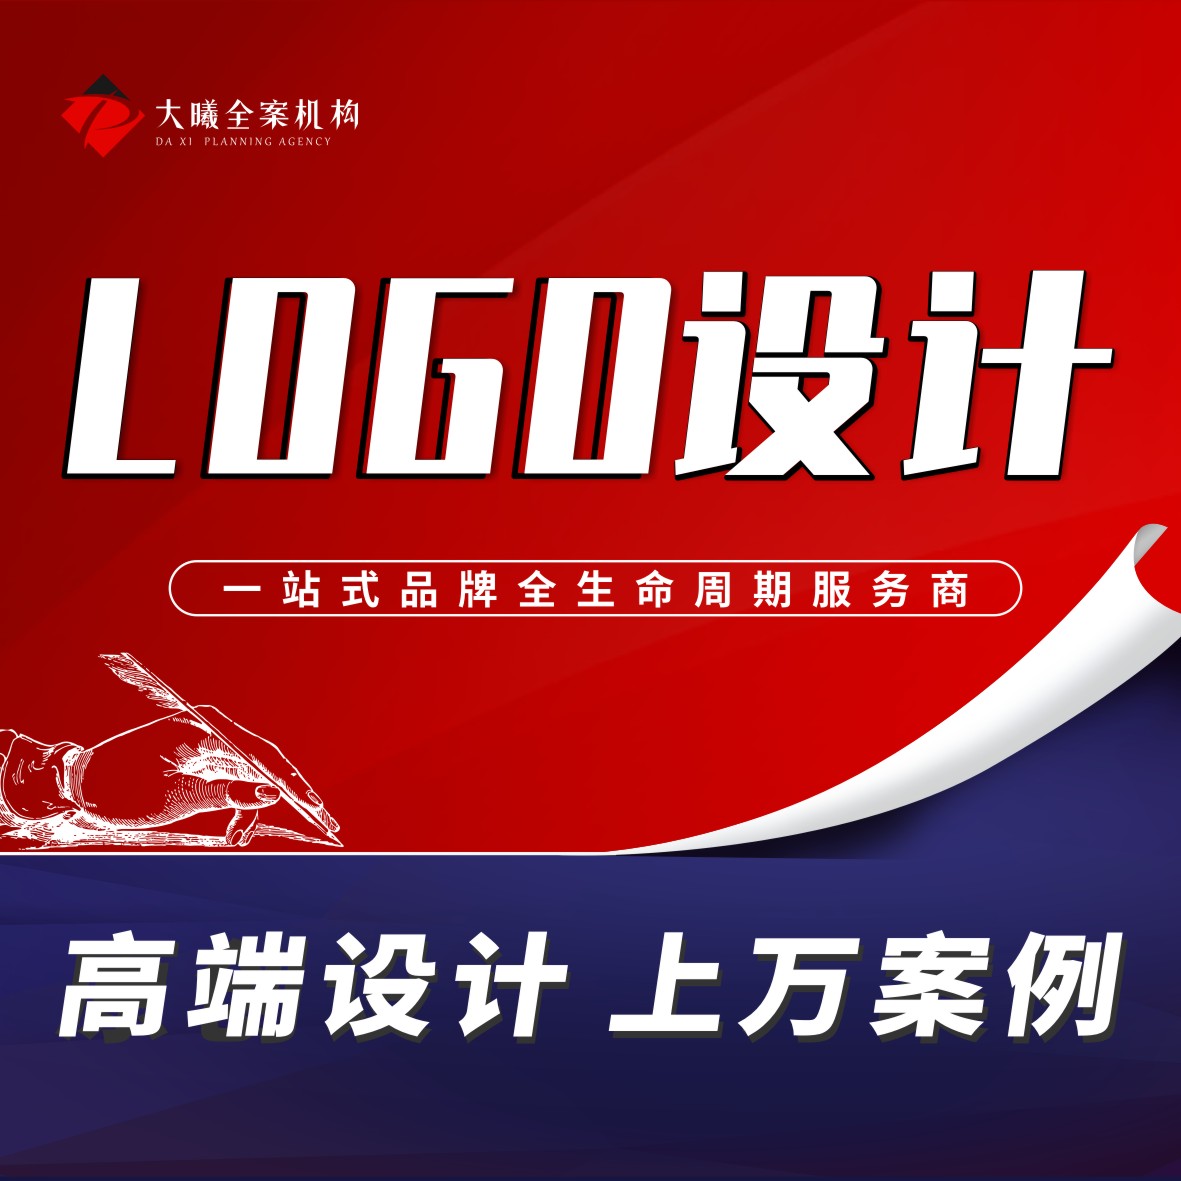 LOGO设计升级美化修改标志设计商标设计品牌高端LOGO定制